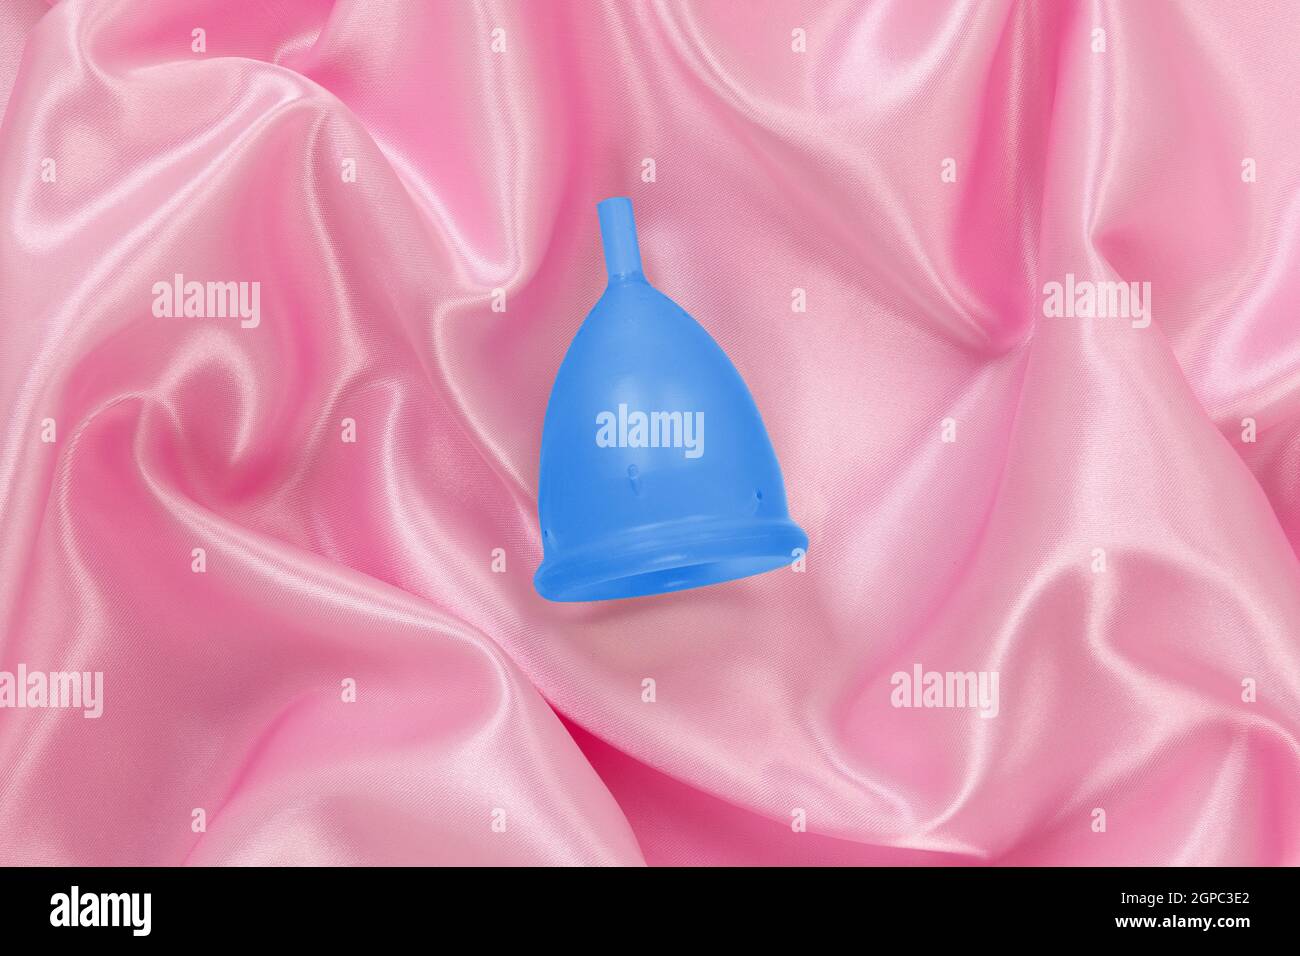 Menstrual cup on pink satin background. Feminine hygiene. Stock Photo